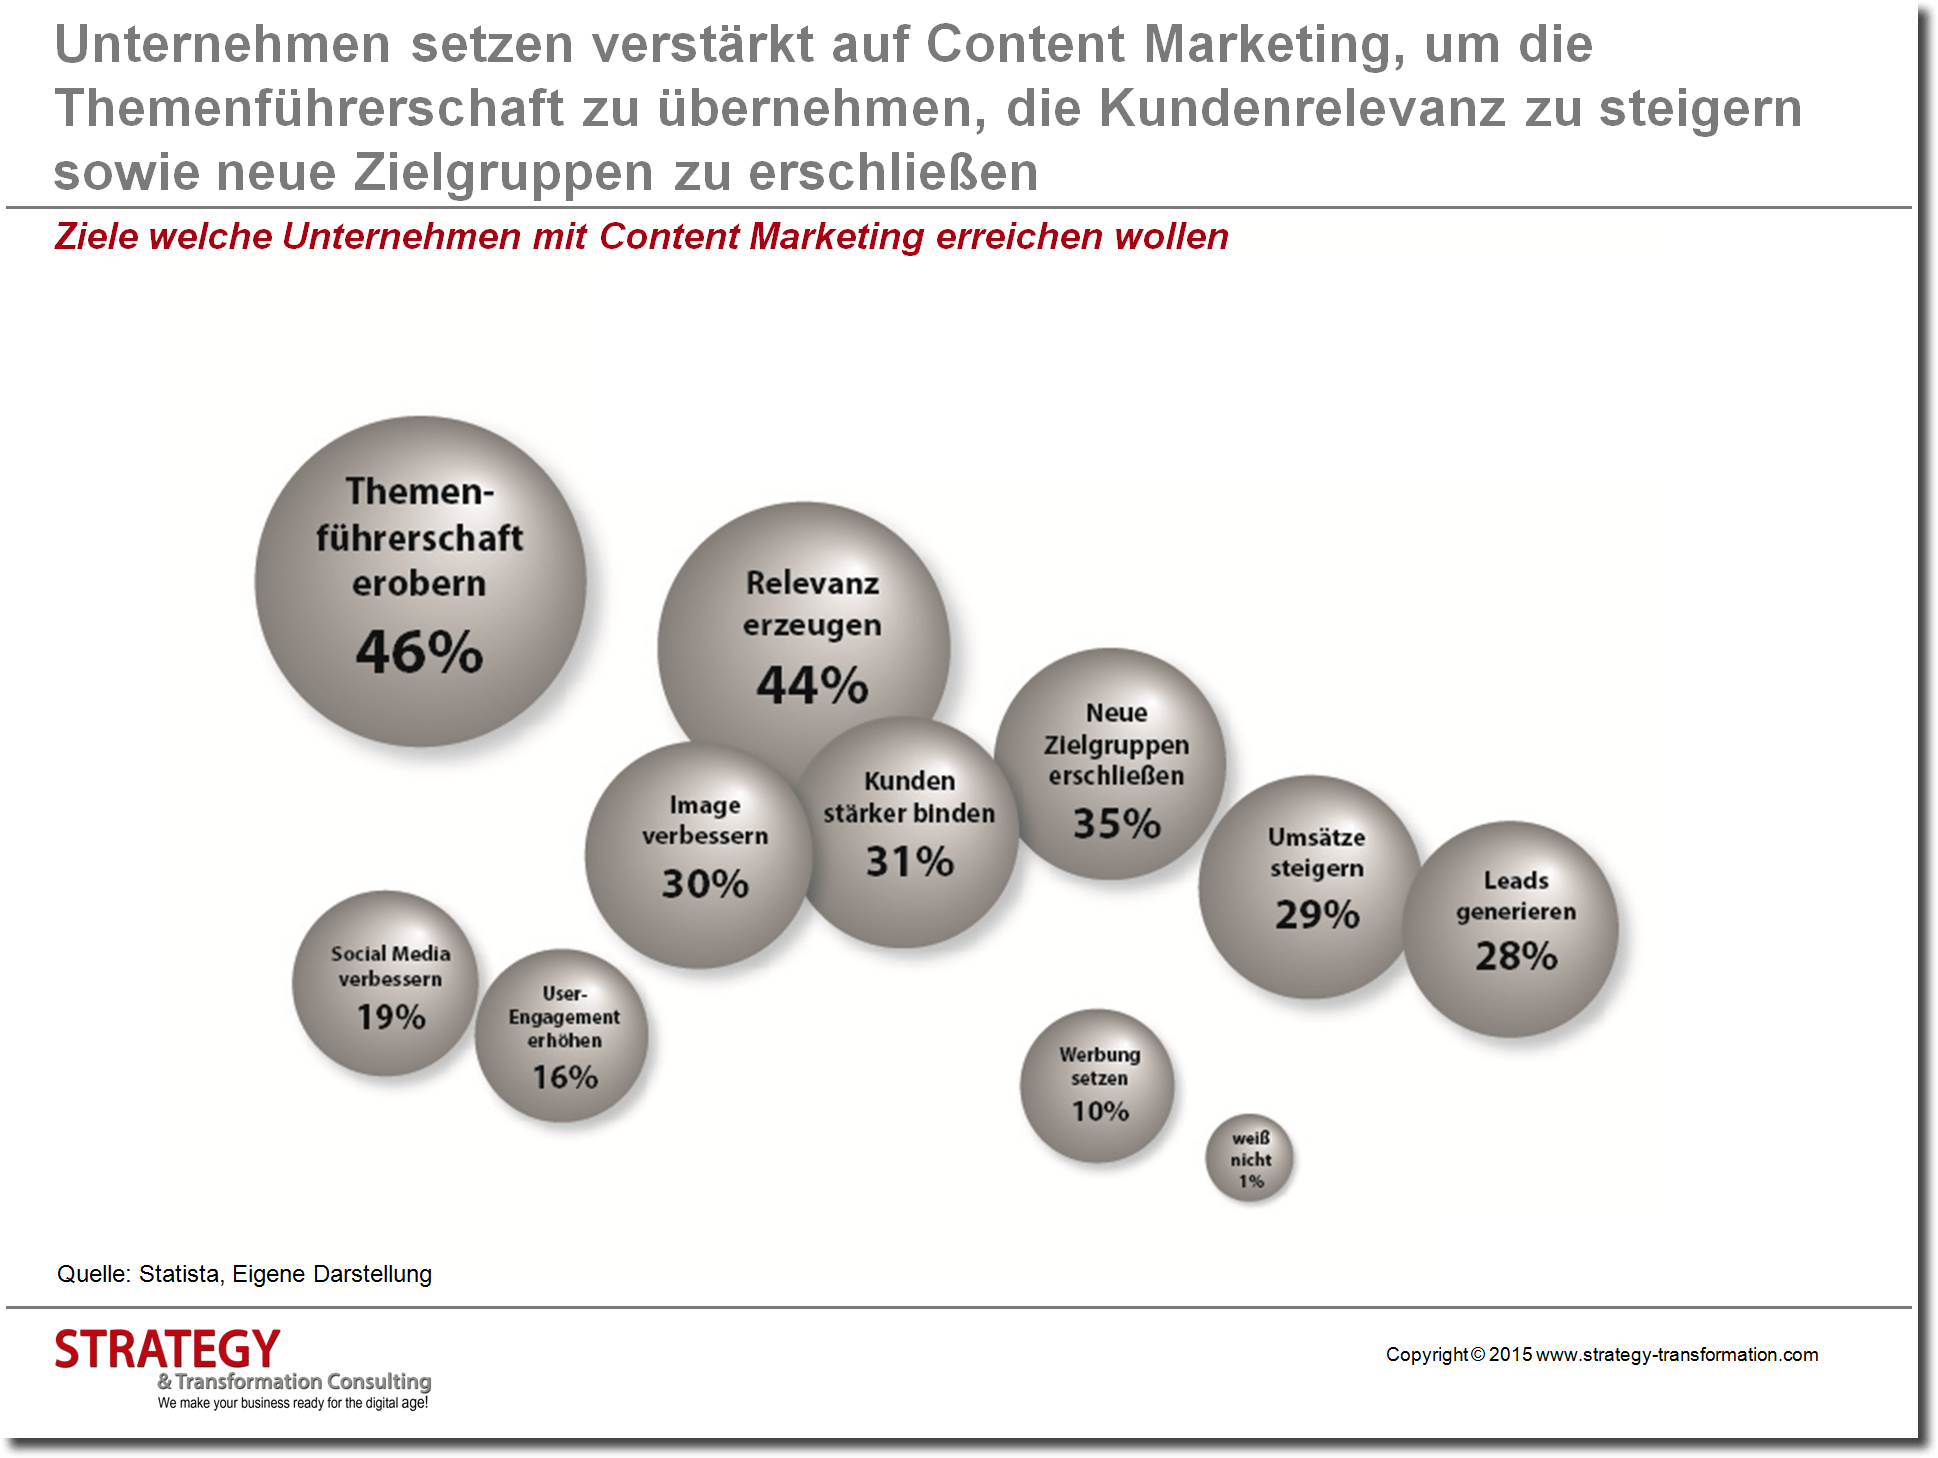 Content Marketing Ziele